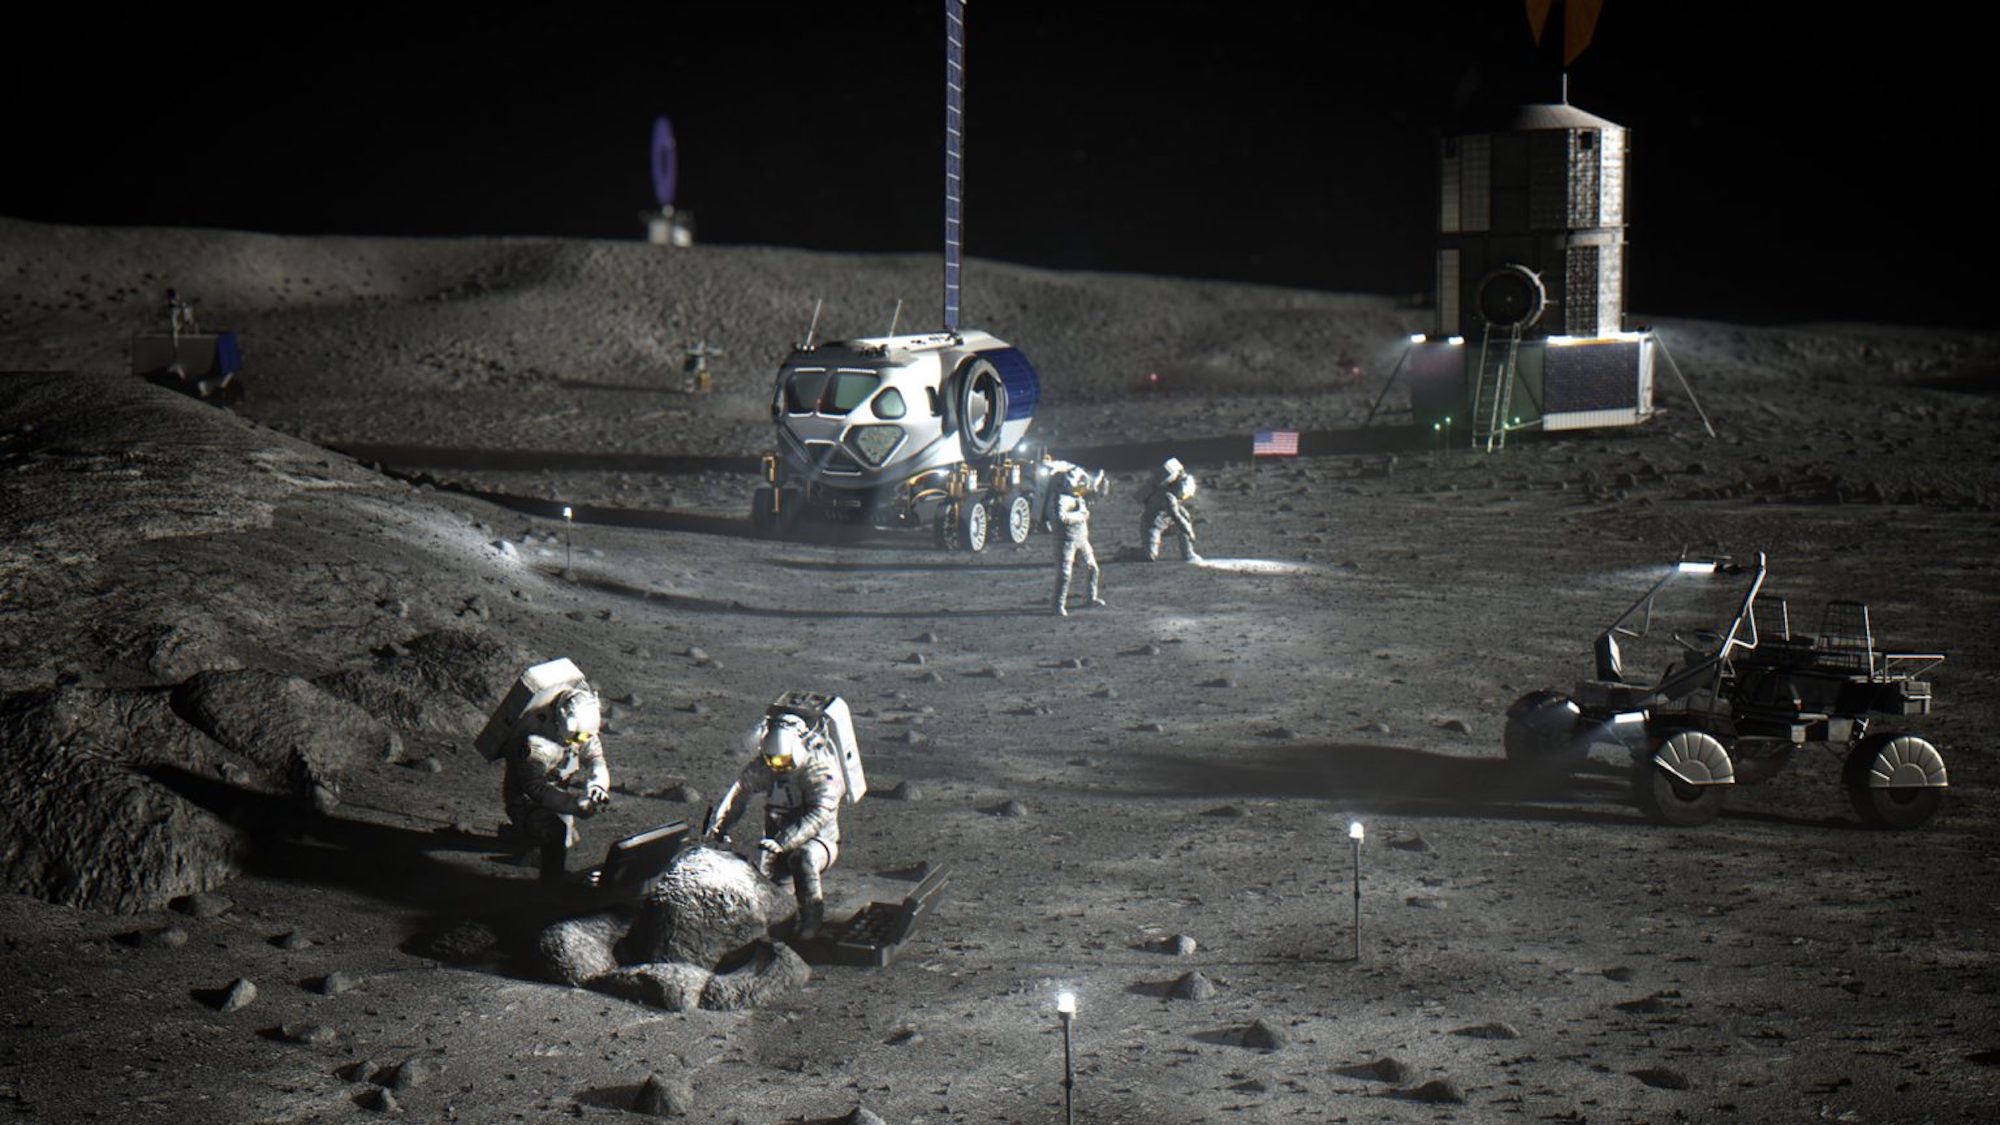 Concept art of Artemis lunar base with astronauts